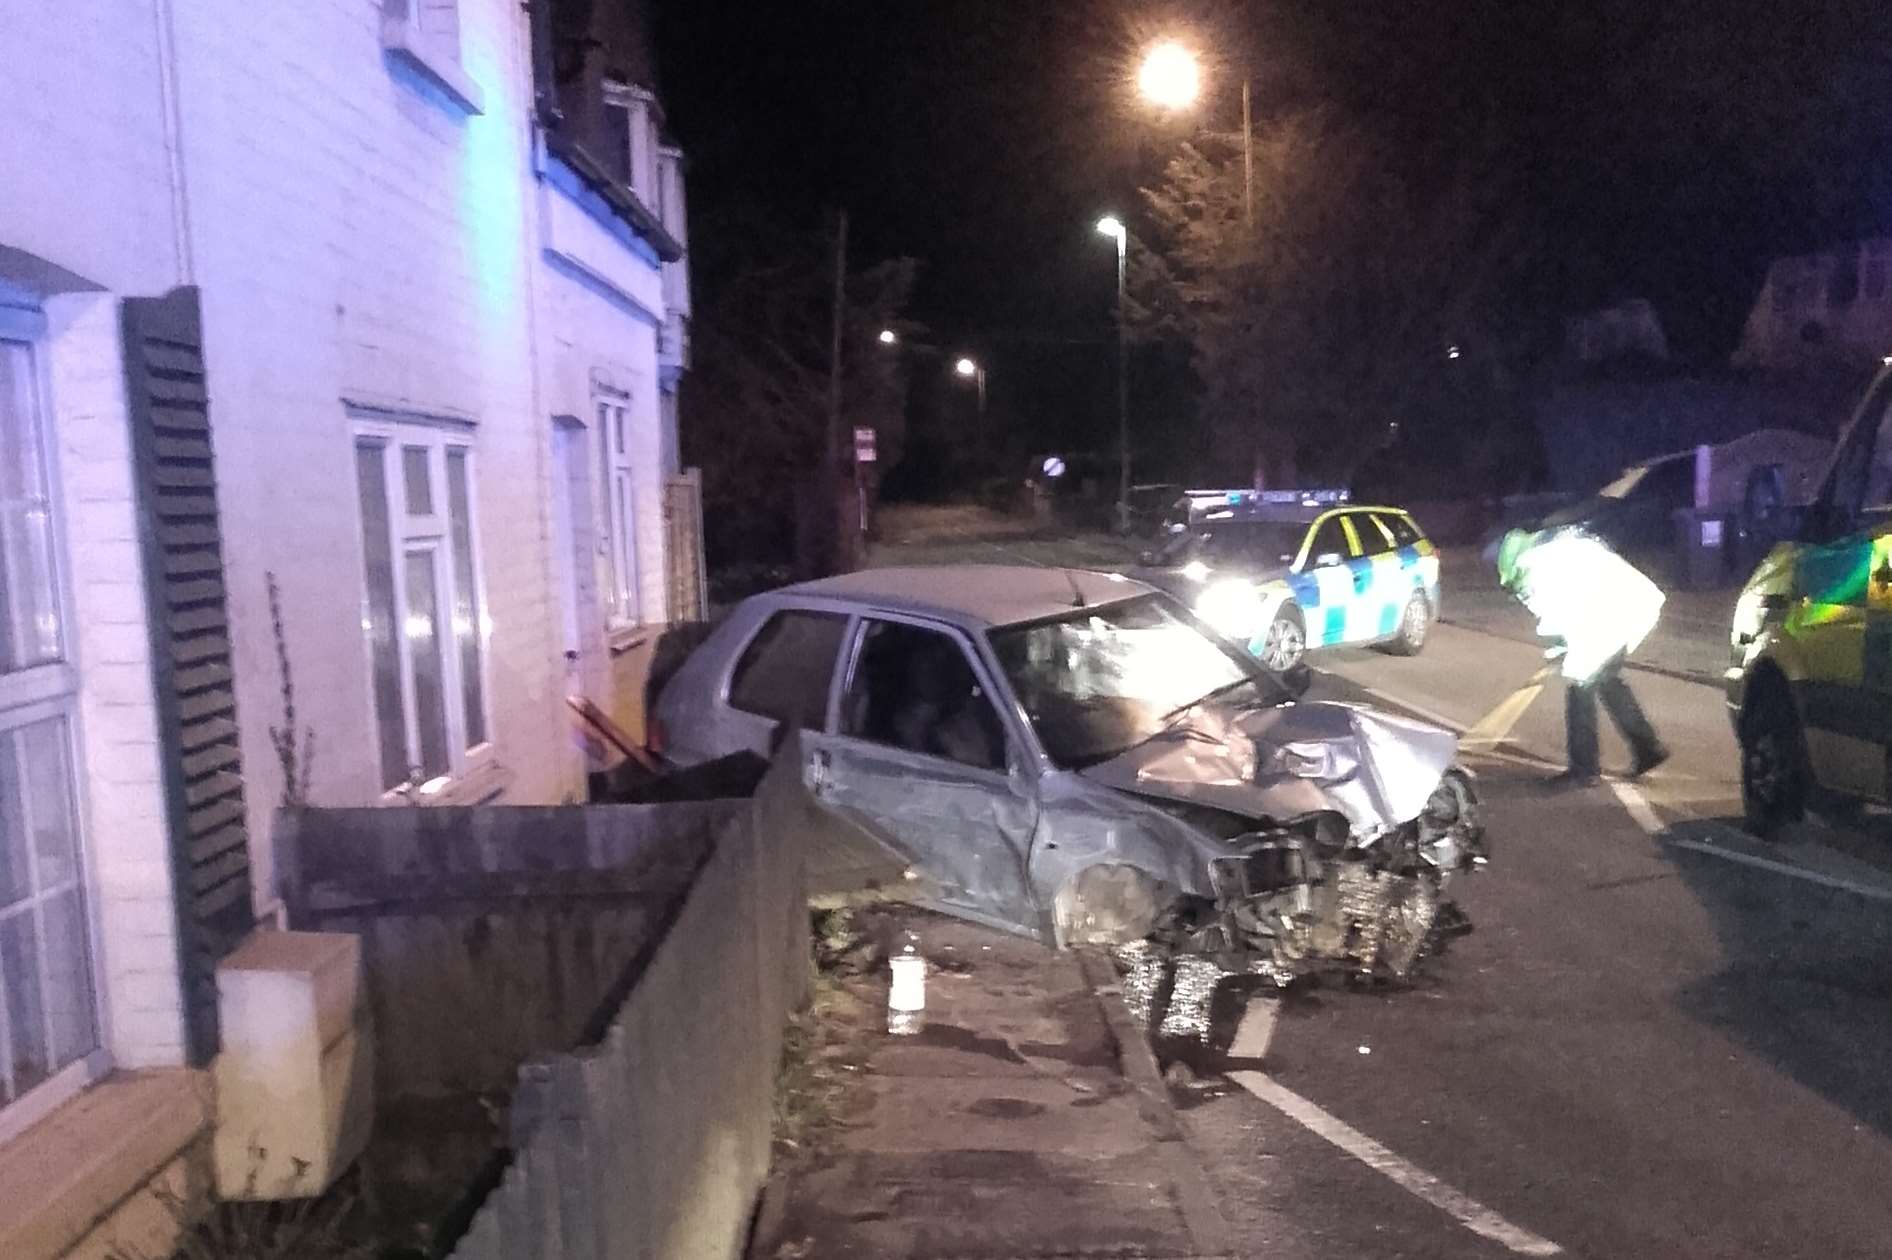 The scene of the accident on Sevenoaks Road